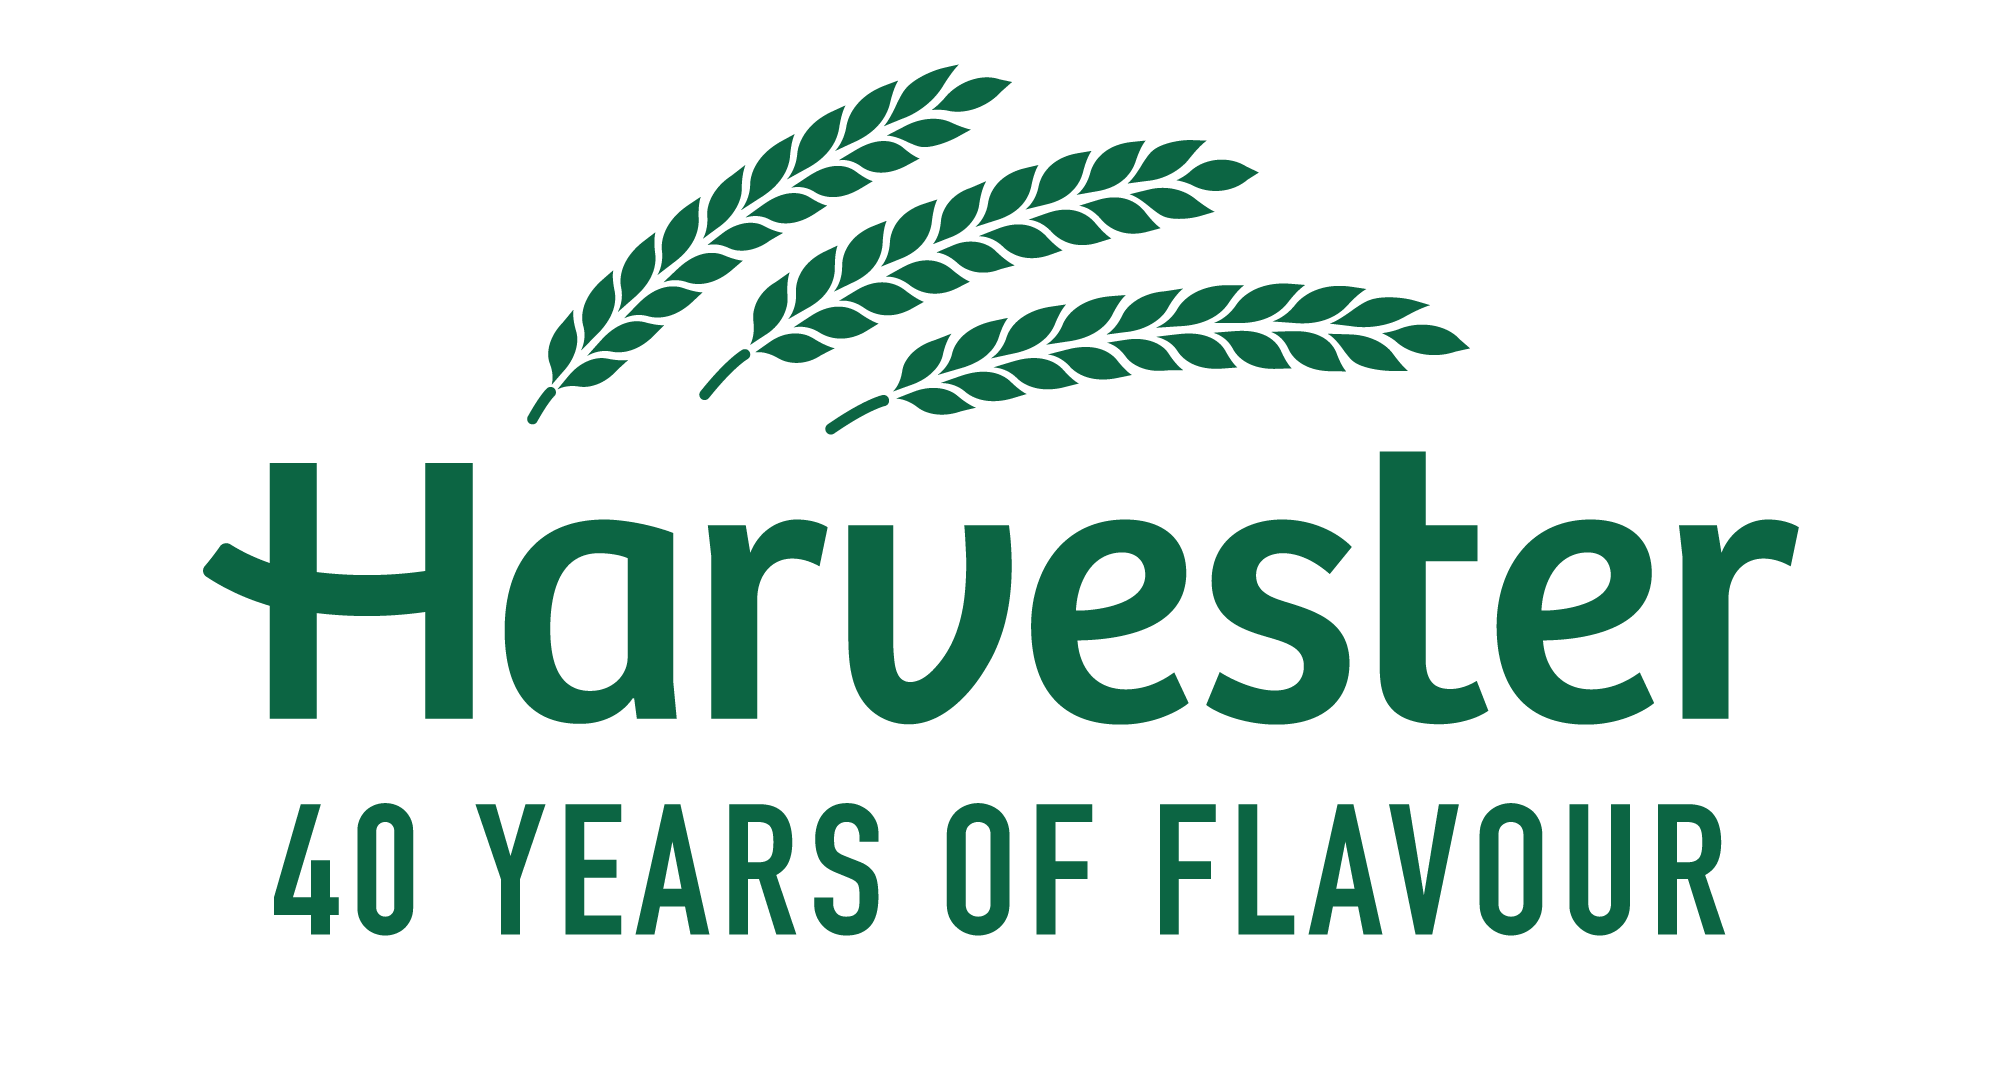 Harvester George Stephenson logo